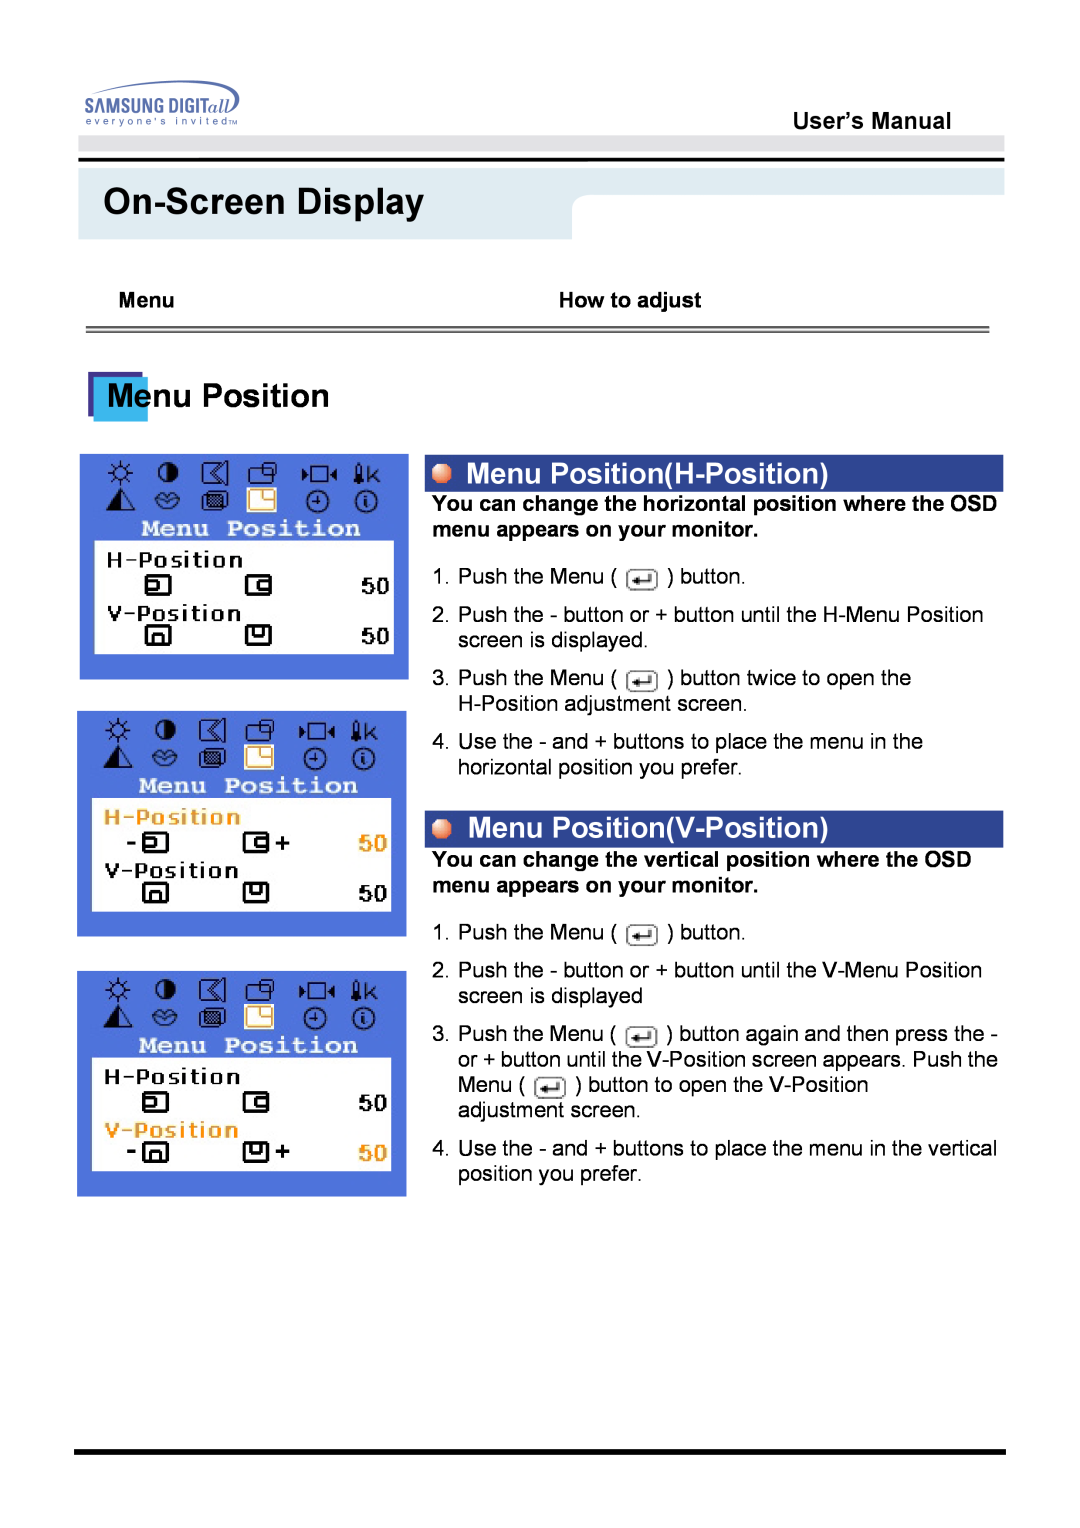 Samsung 171Q manual Menu PositionH-Position, Menu PositionV-Position, On-Screen Display, User’s Manual 